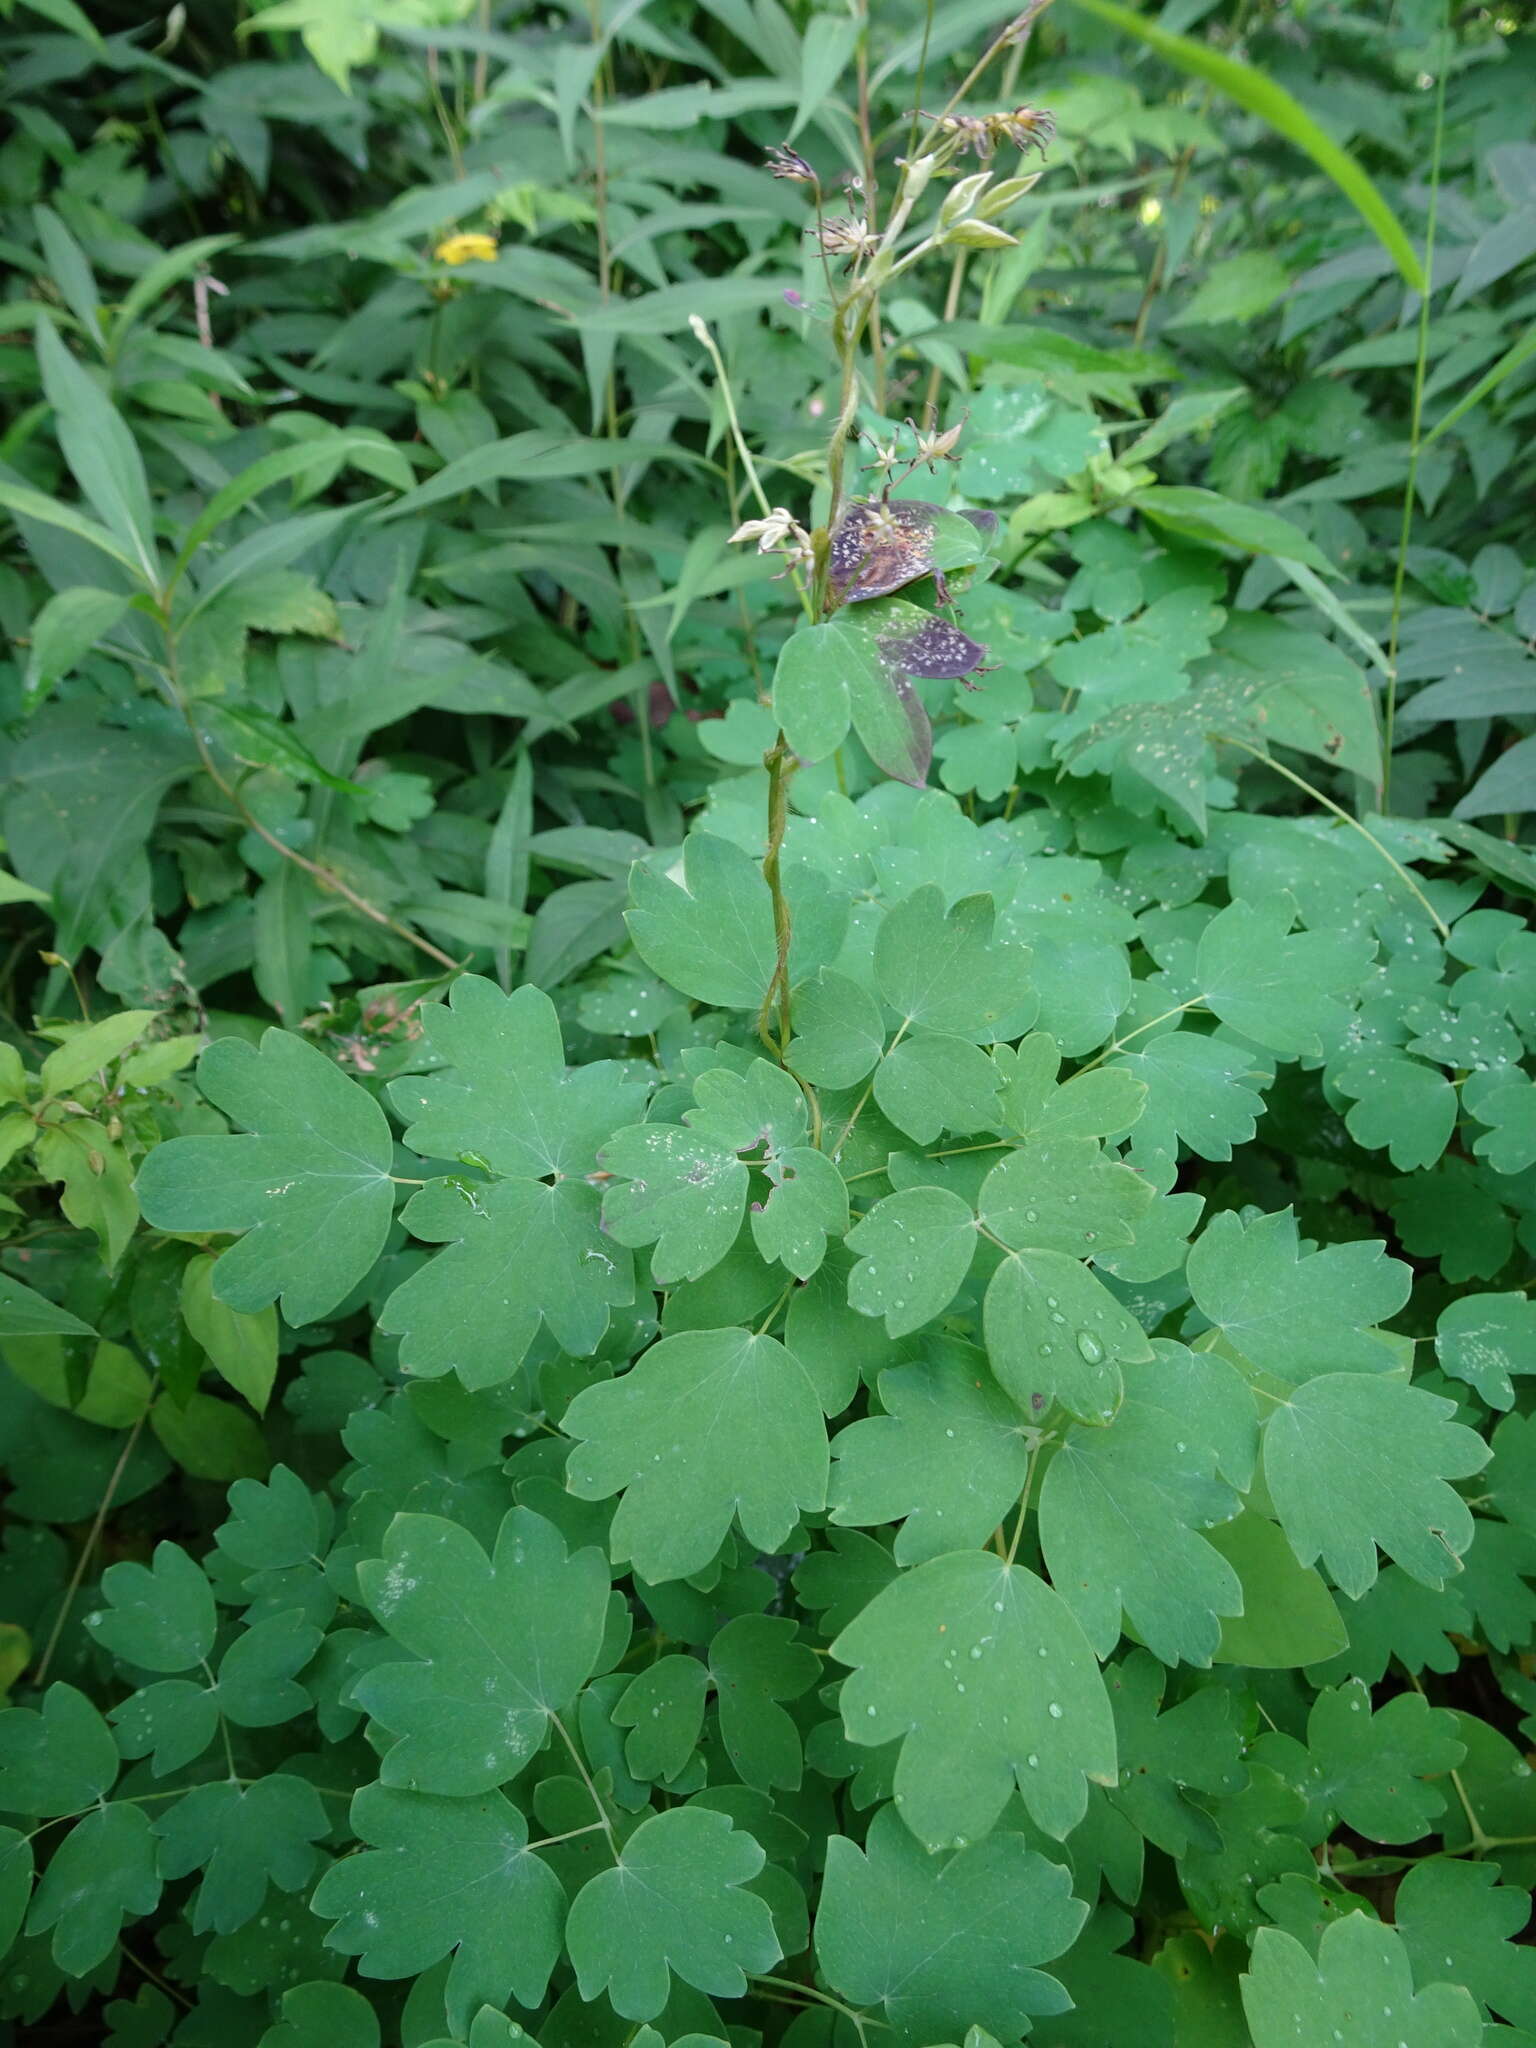 Image of Veiny-Leaf Meadow-Rue